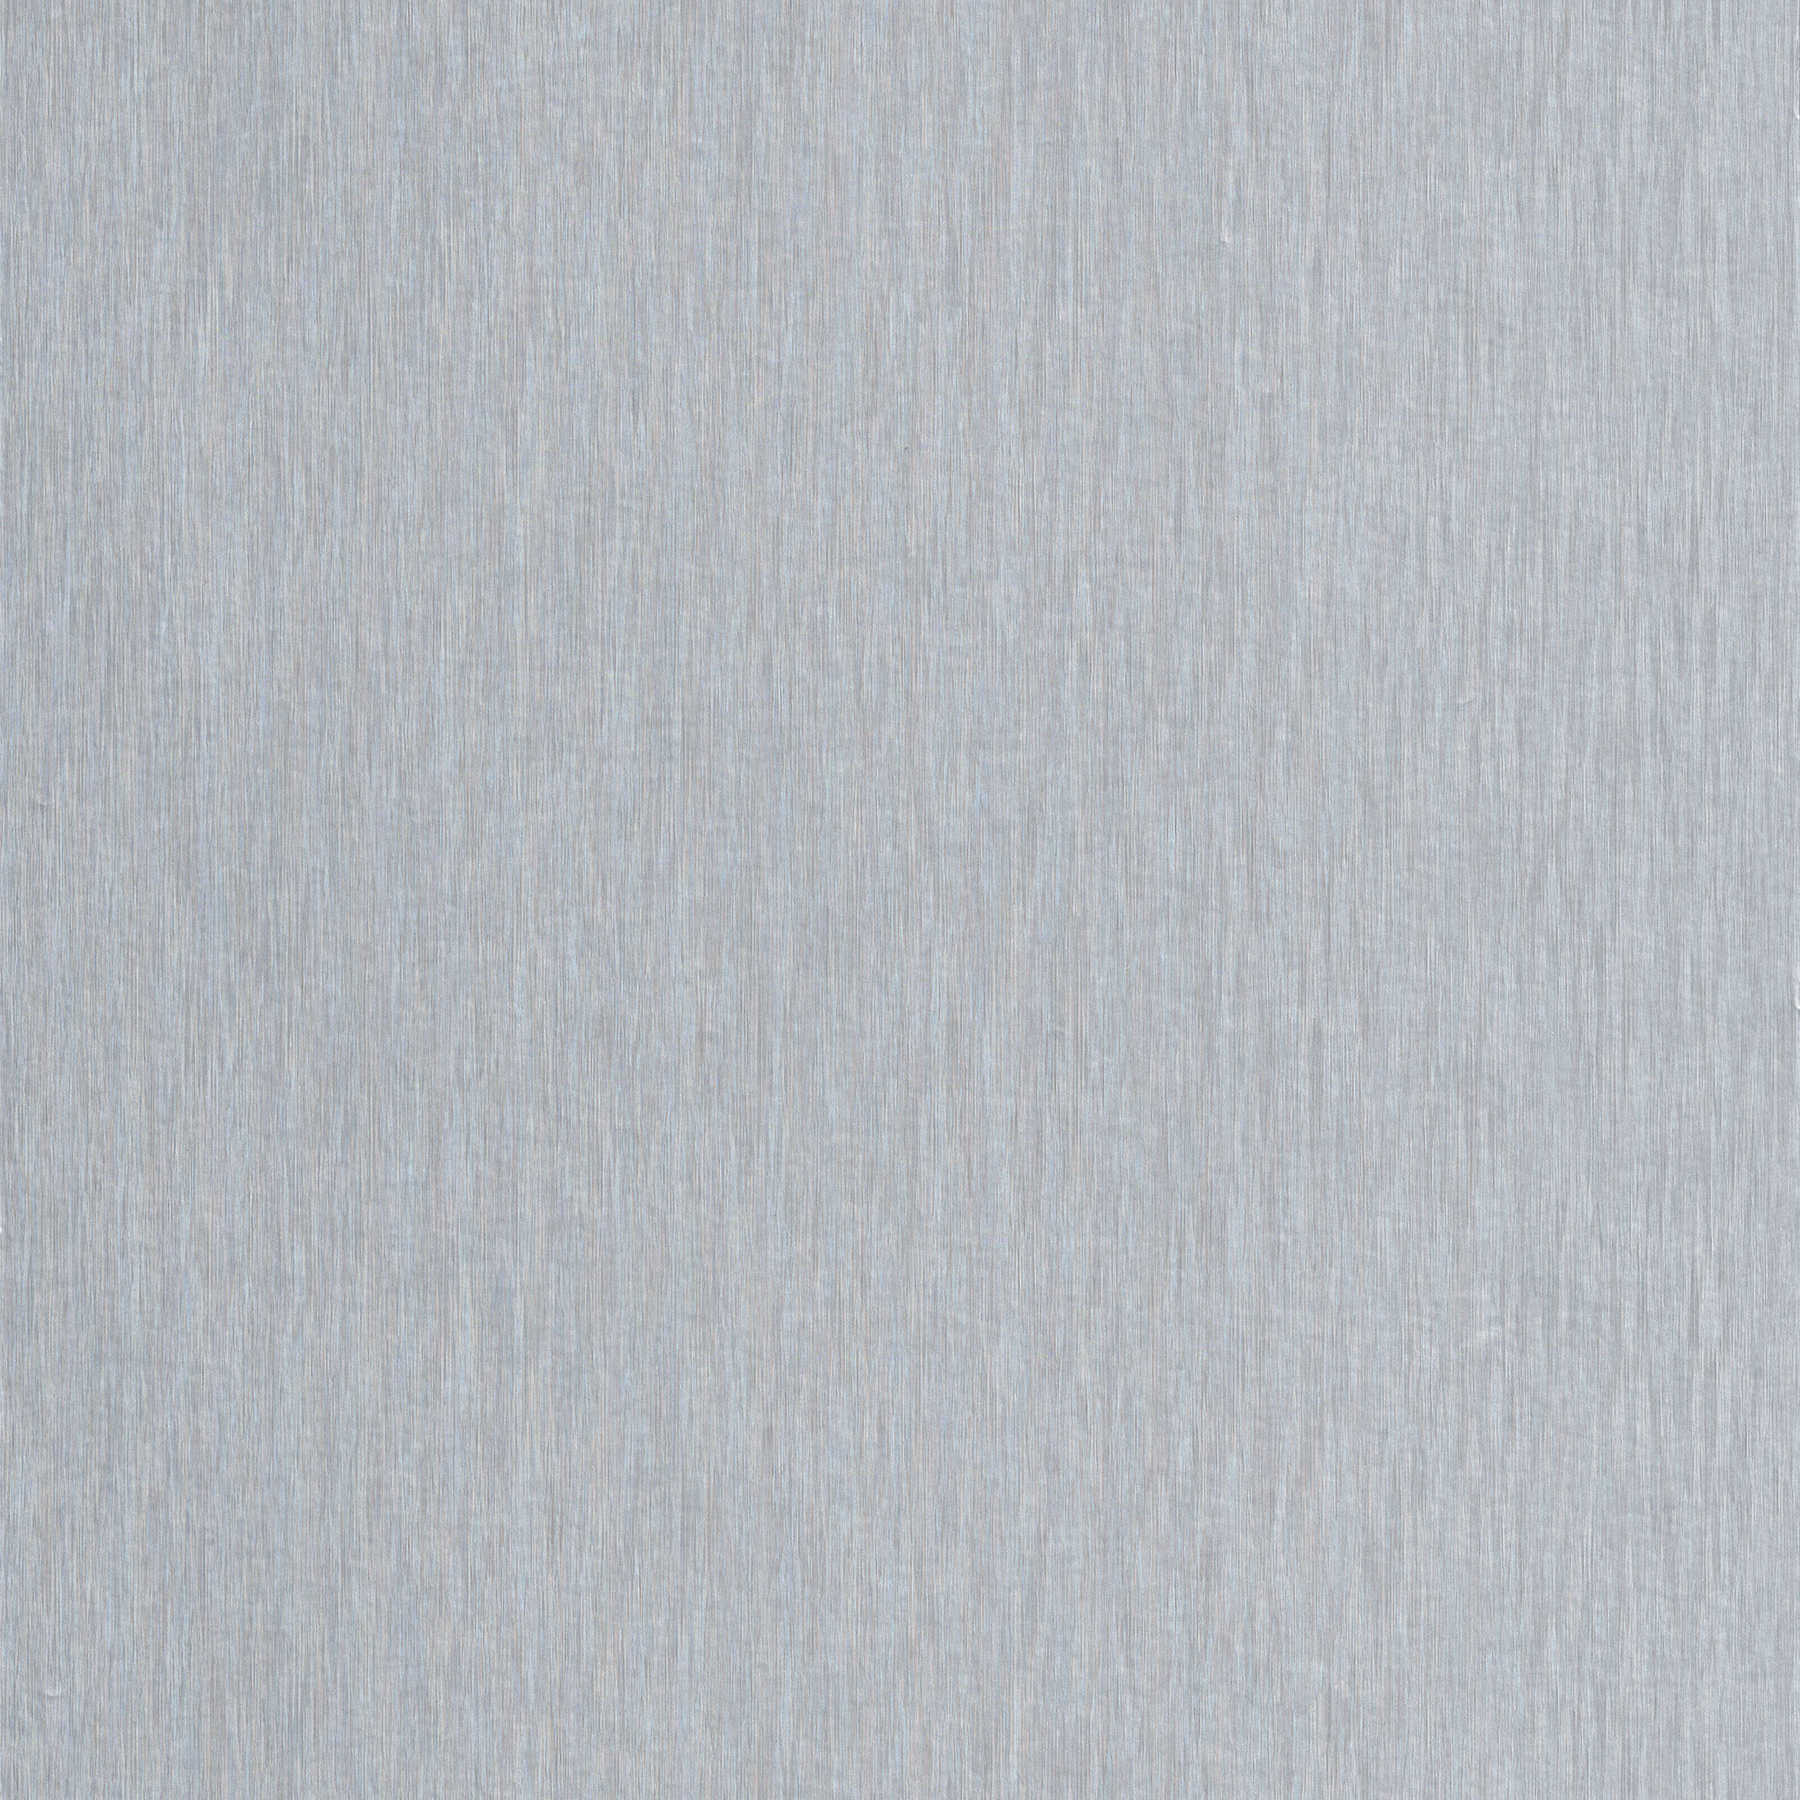 Magnetic wallpaper self-adhesive grey plain - pop.up panel
